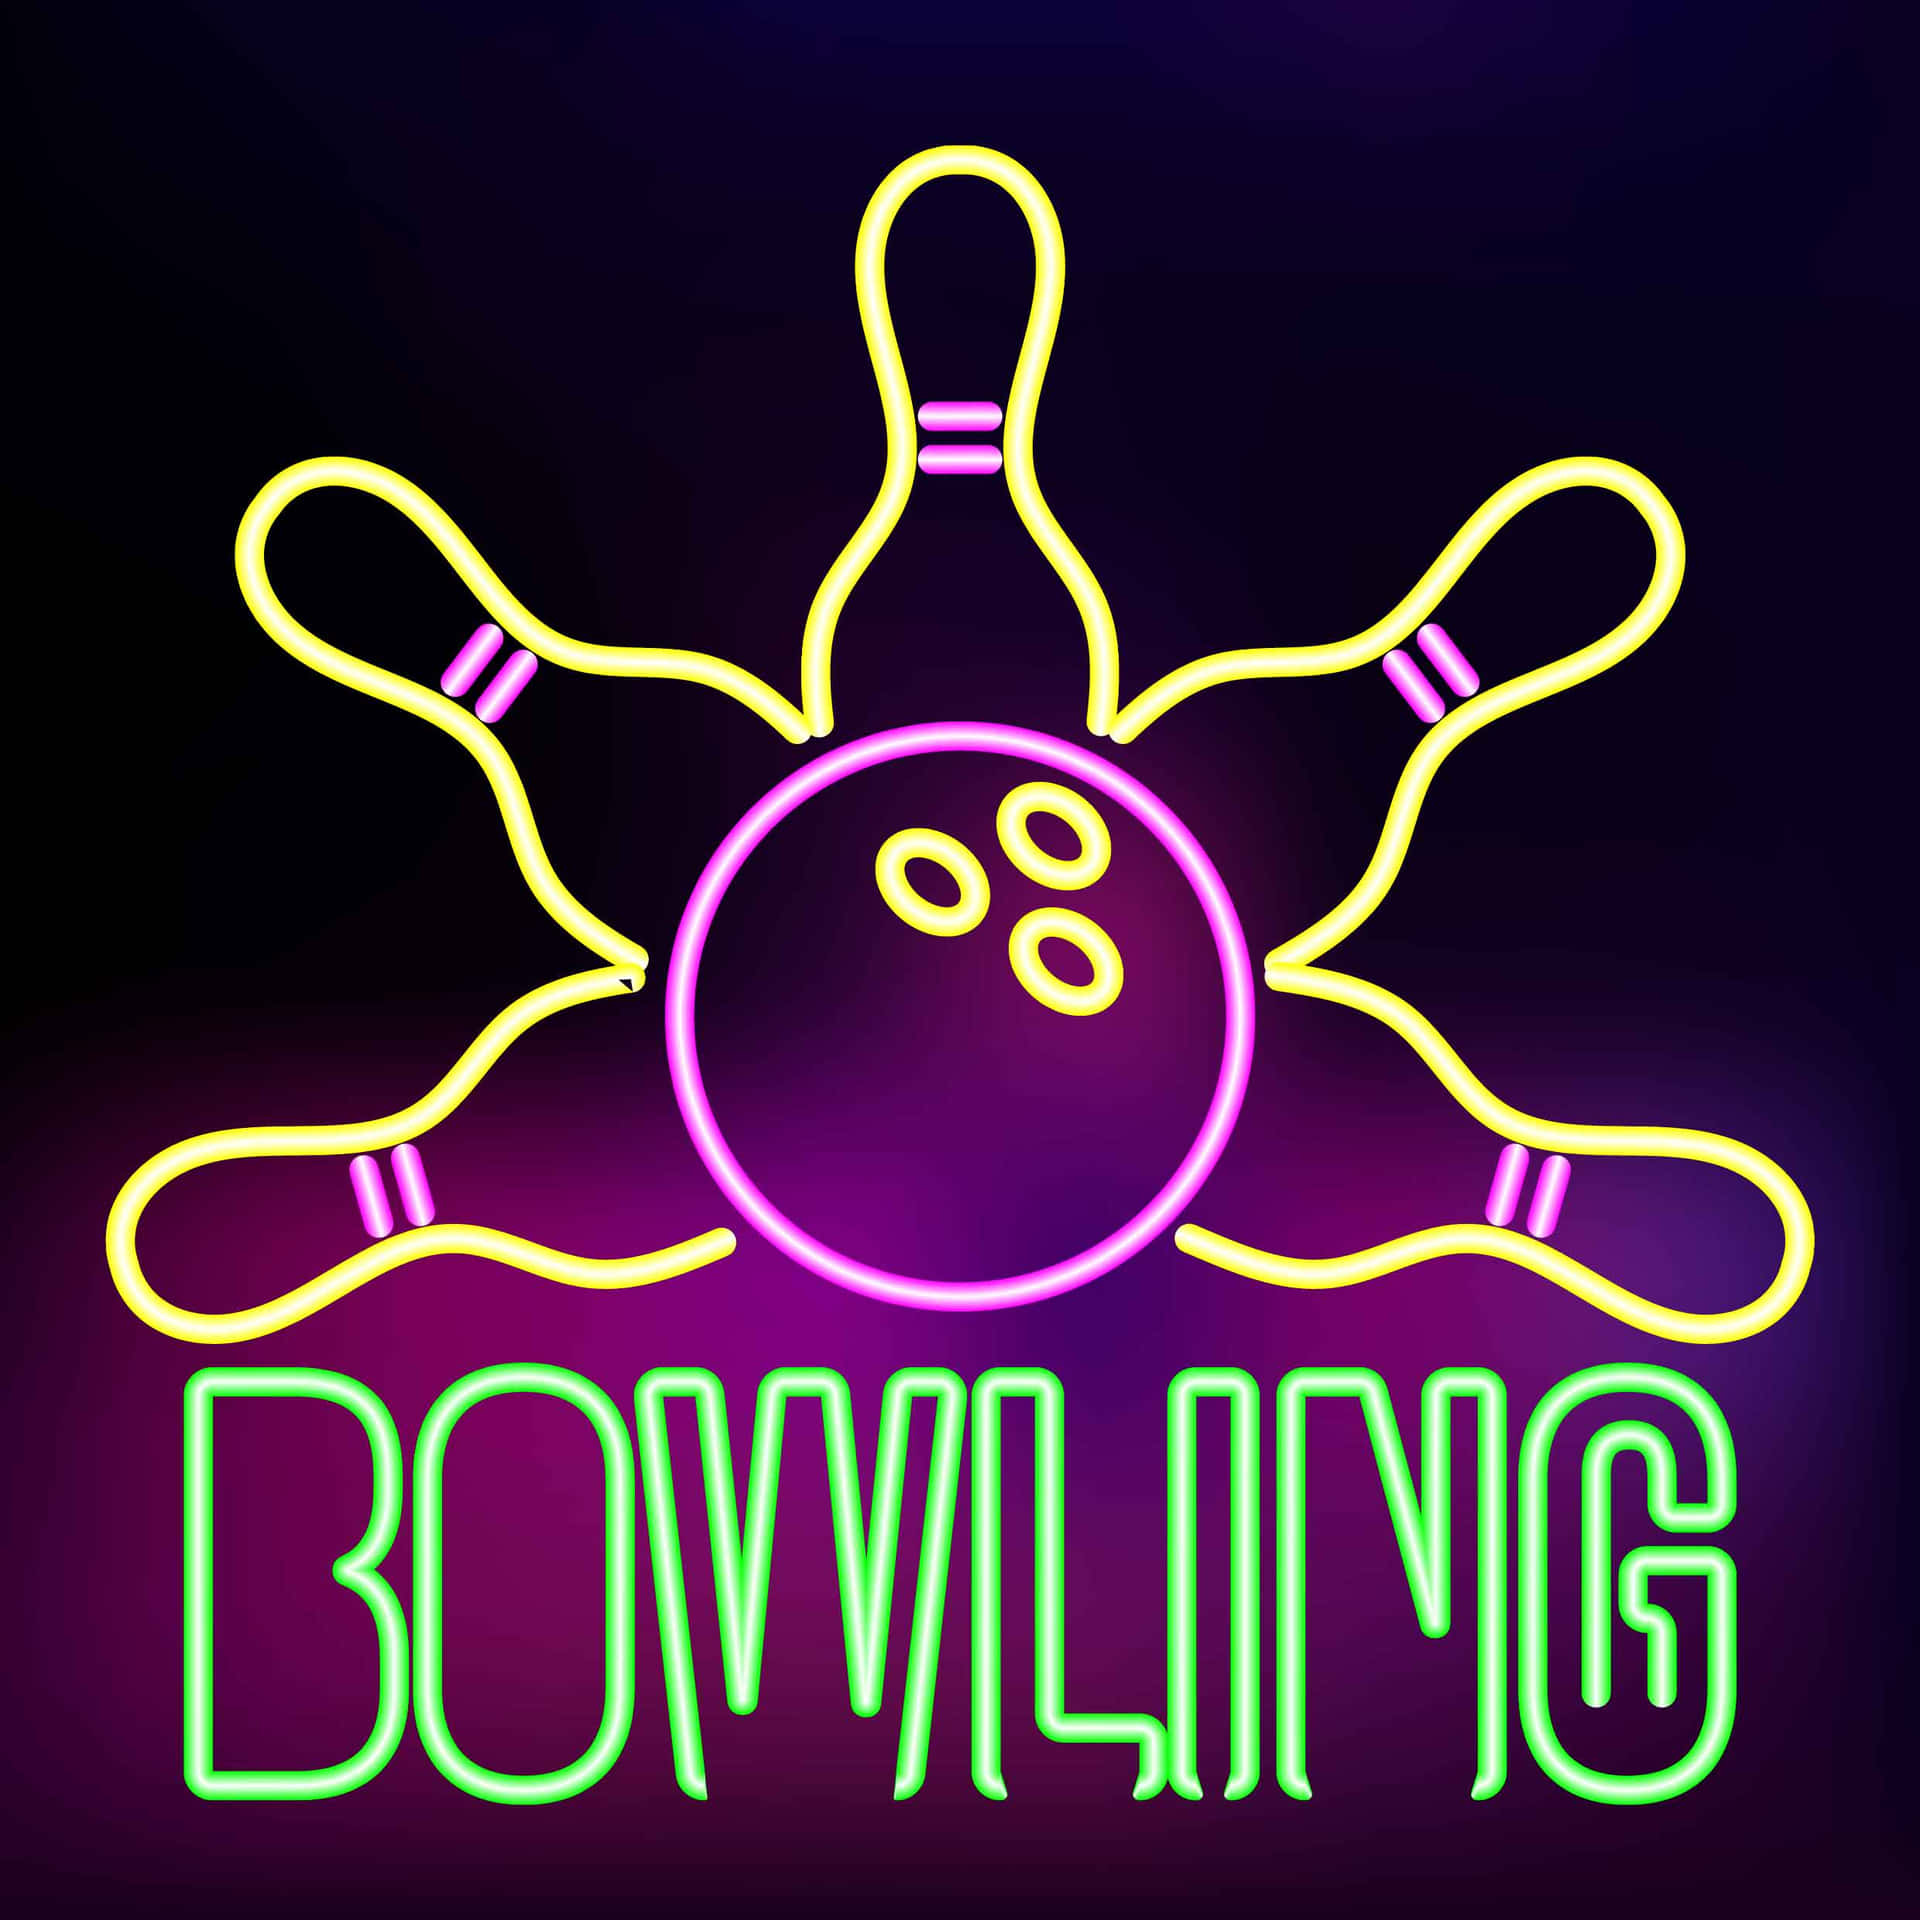 Emozionanteazione Nel Bowling